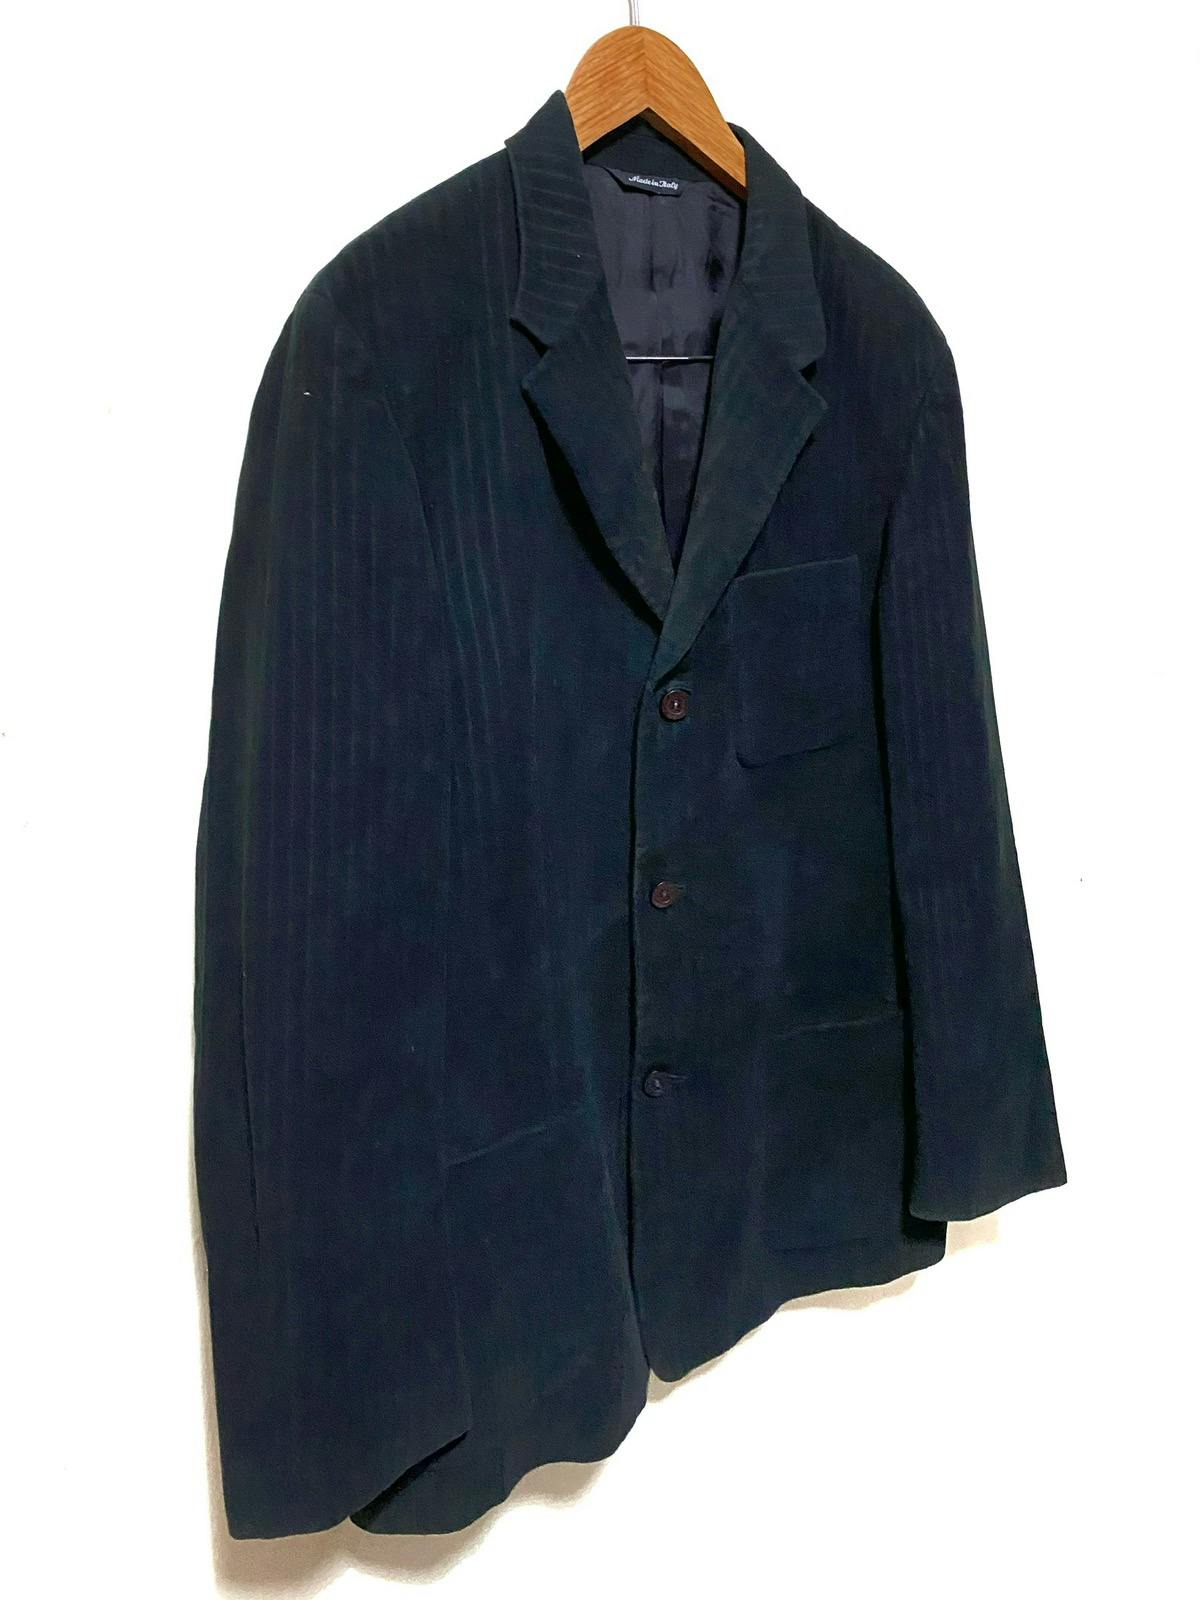 Vintage Versus Gianni Versace Jacket Blazer - 4